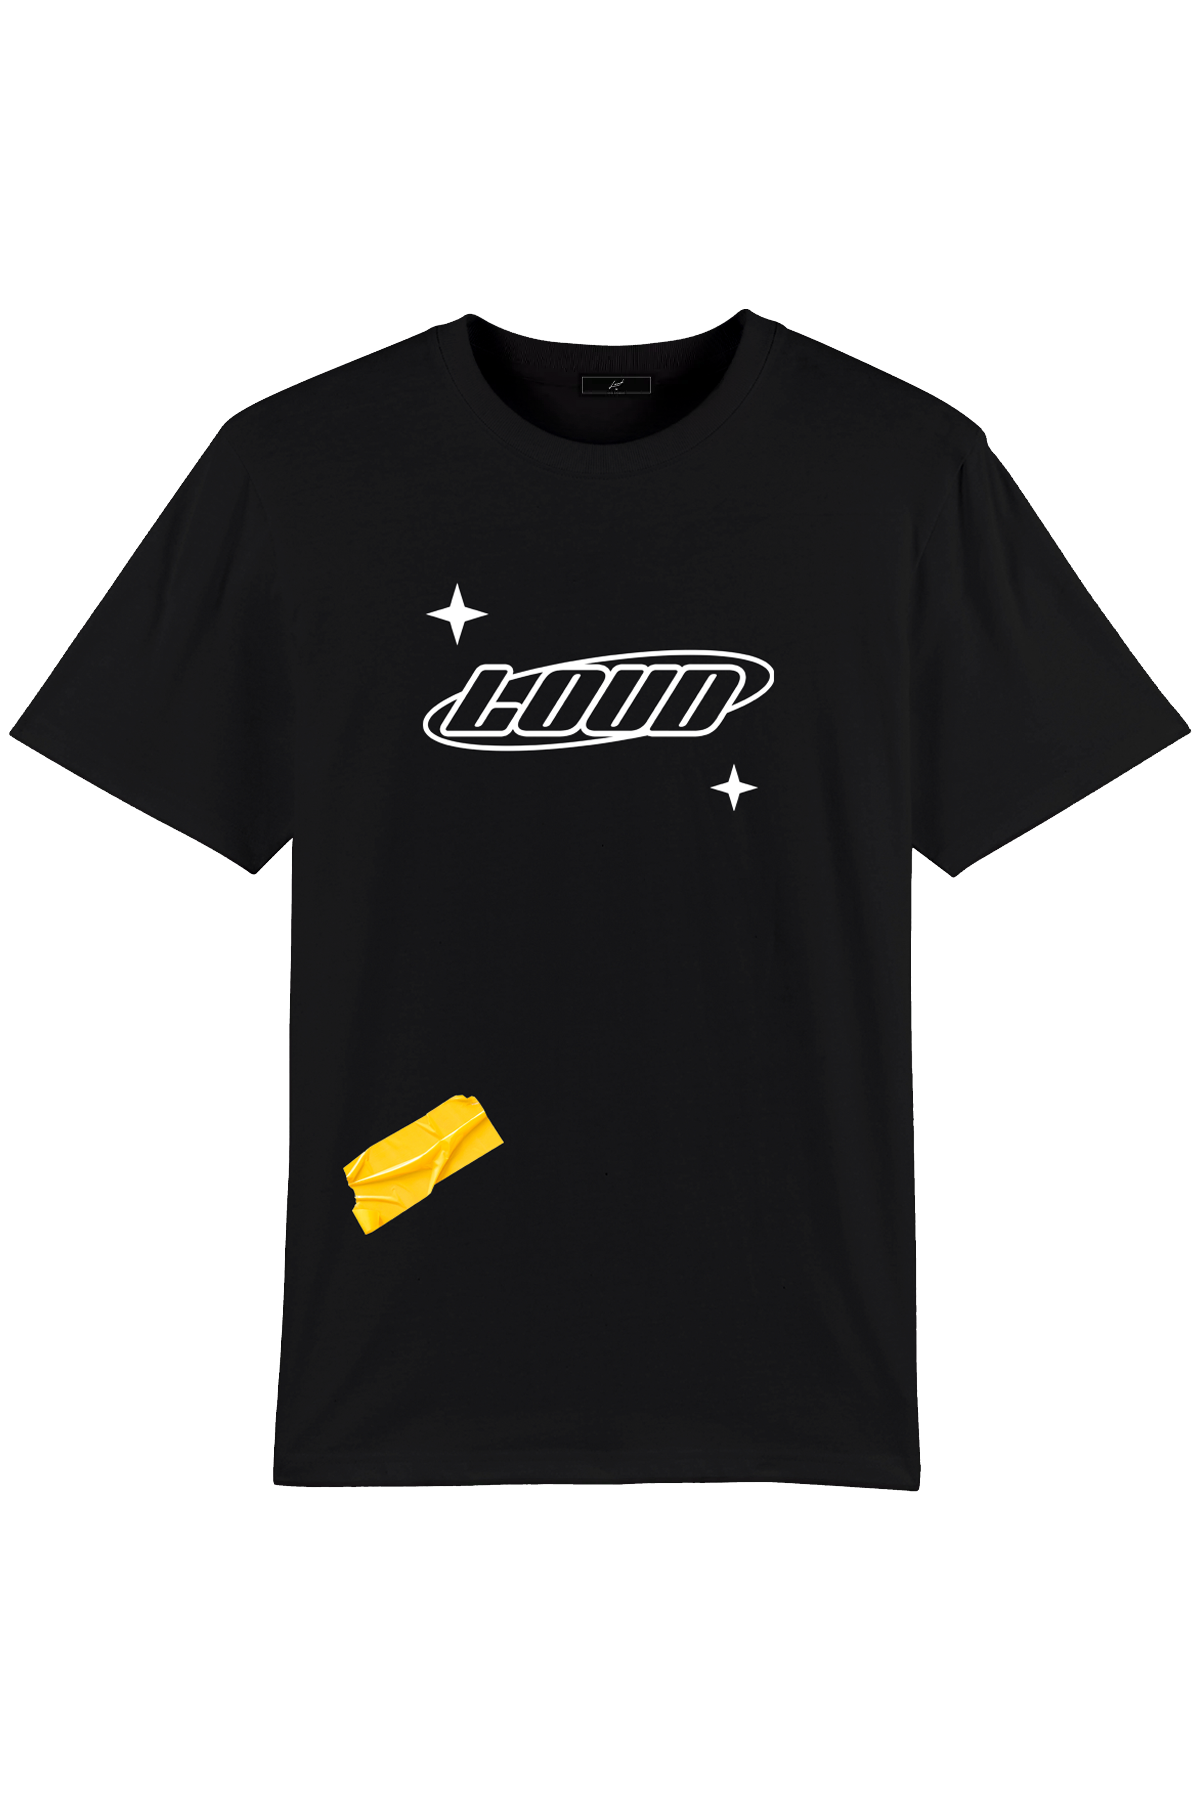 Loud Logo Yellow Tape - Black T-Shirt - Live Look Loud